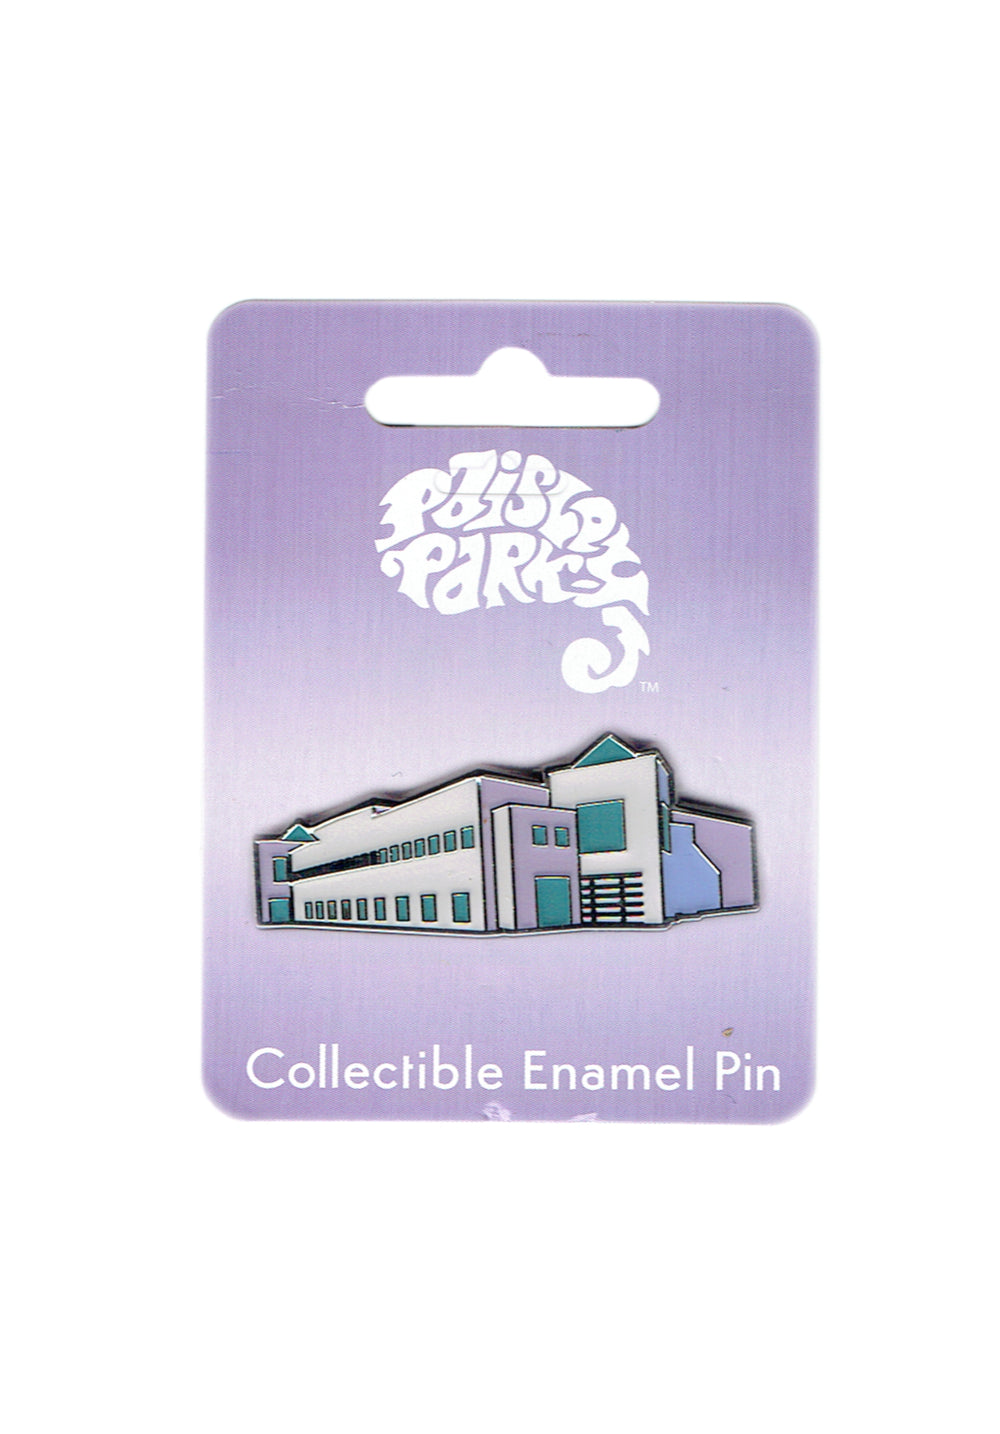 Official Paisley Park Enamel Pin Badge Brand New Studio Prince